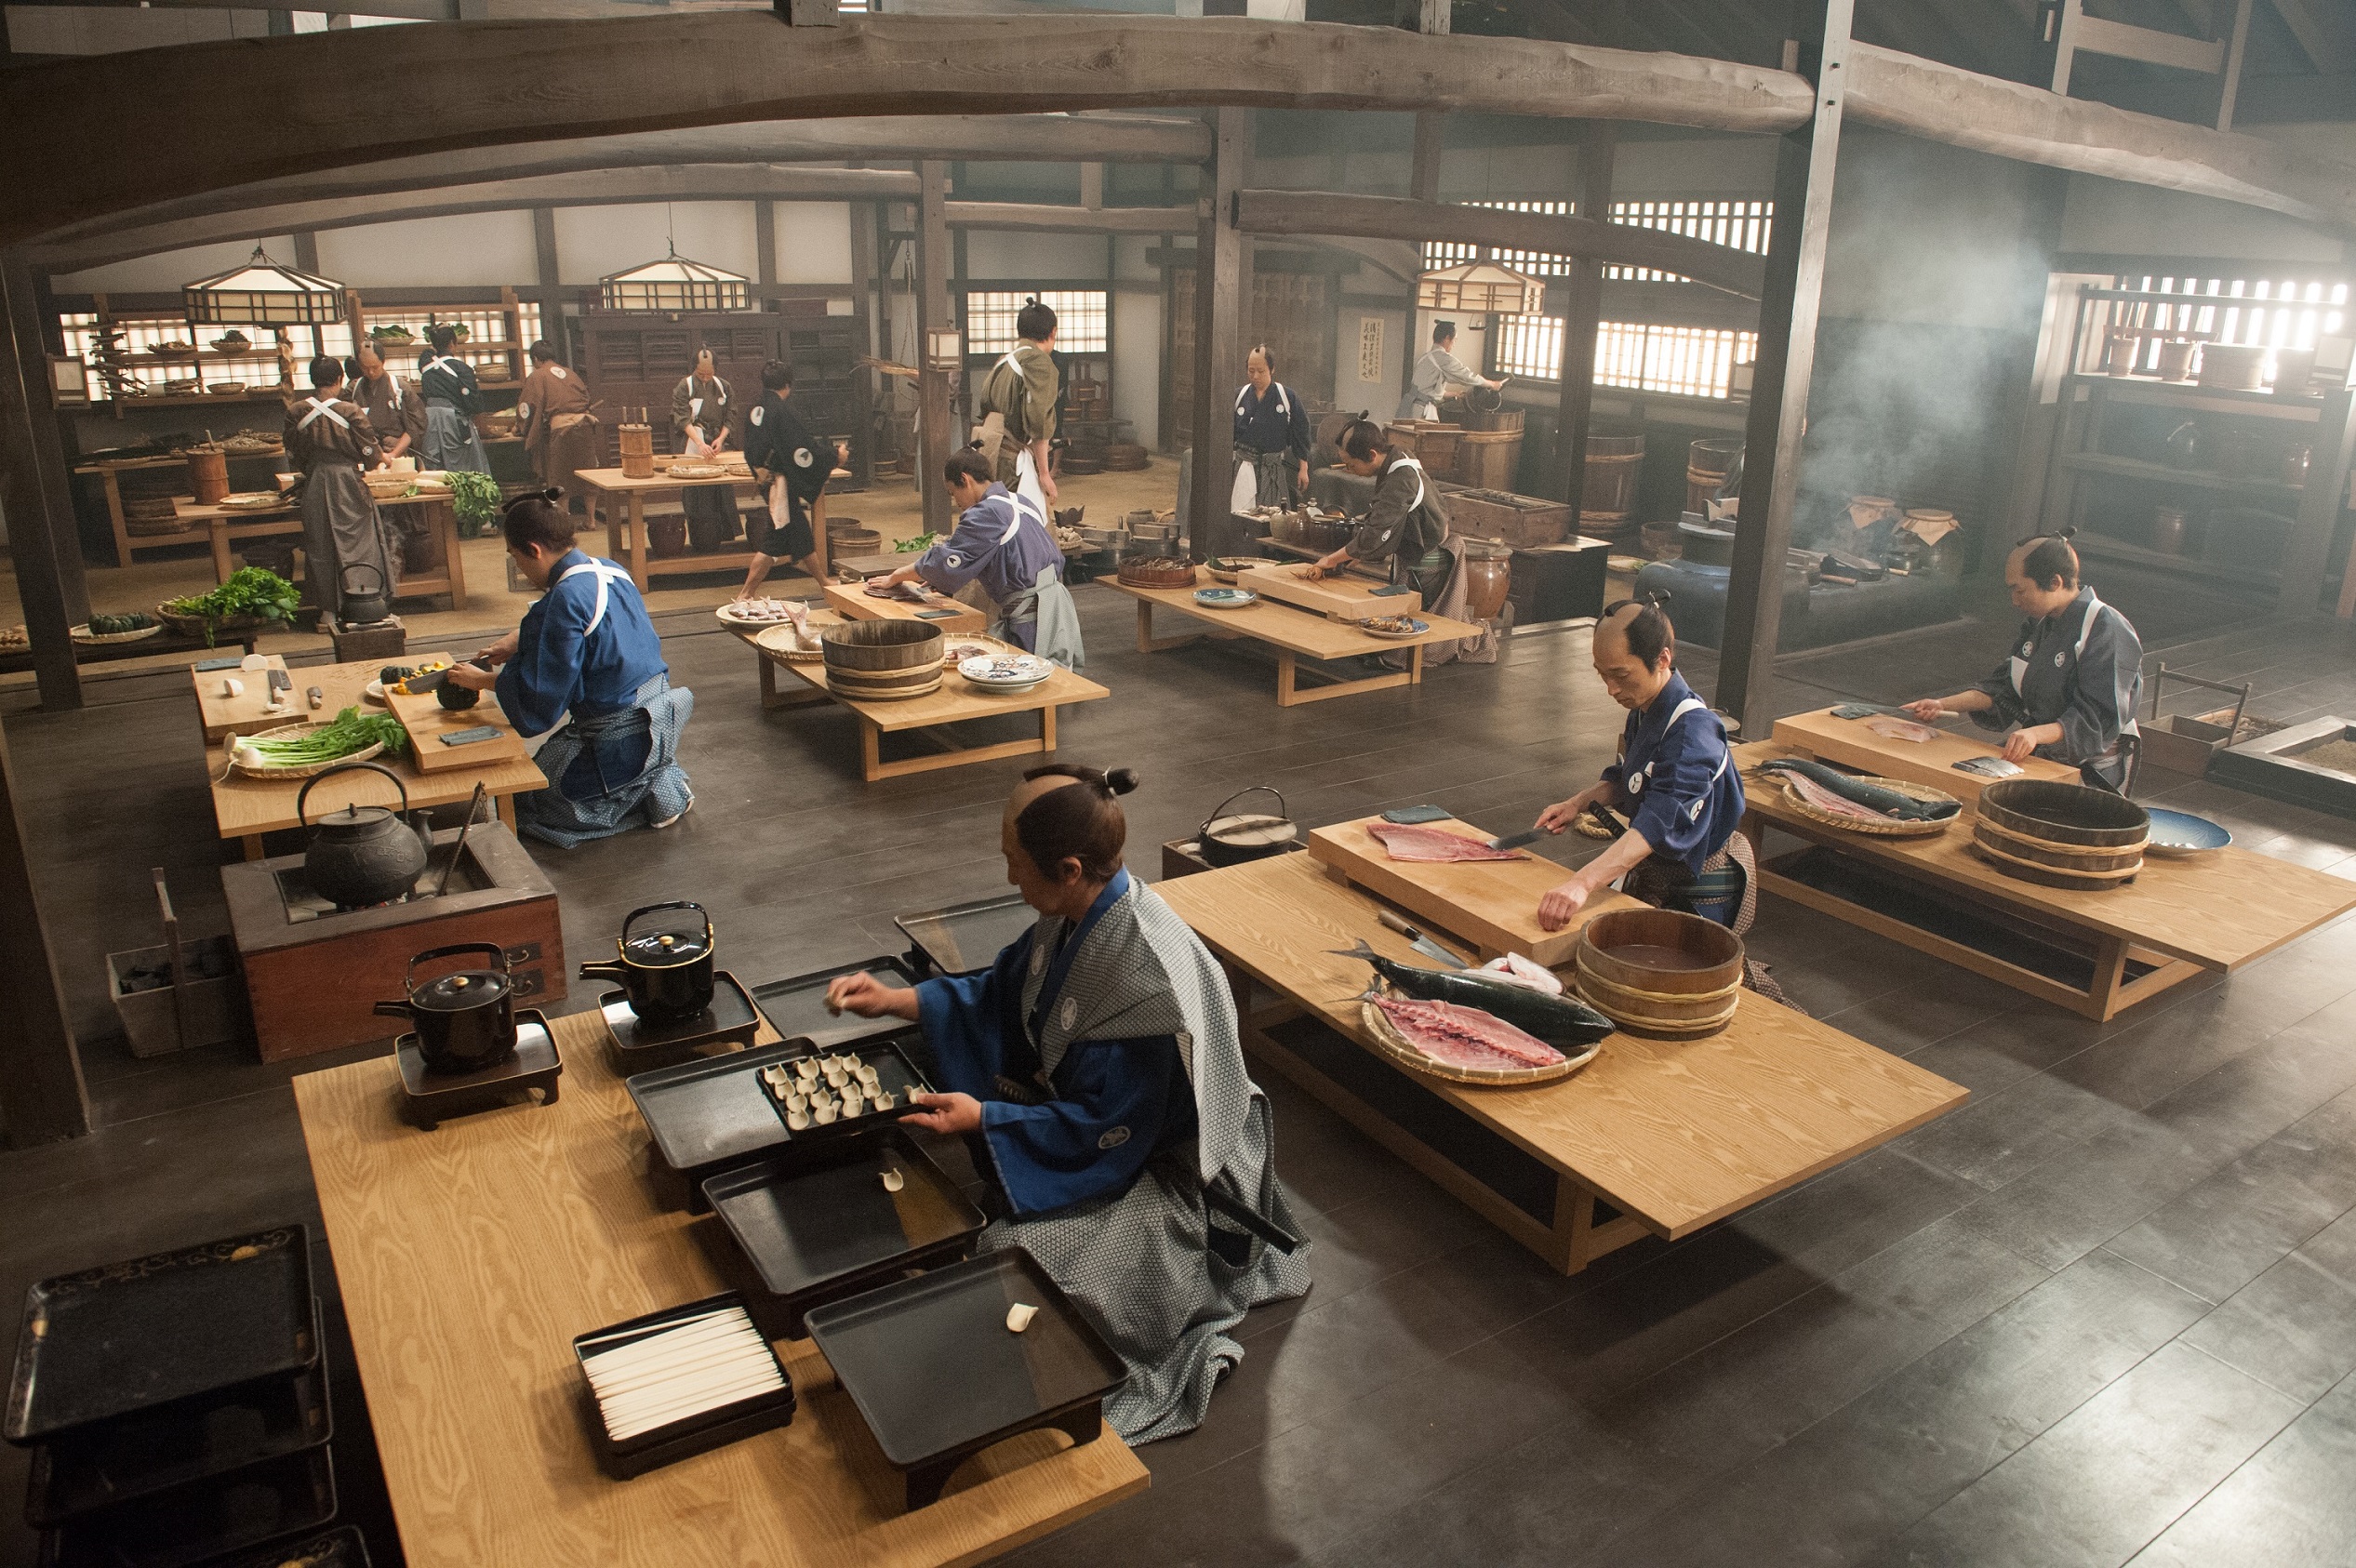 ©2013 “A Tale of Samurai Cooking” Film Partners